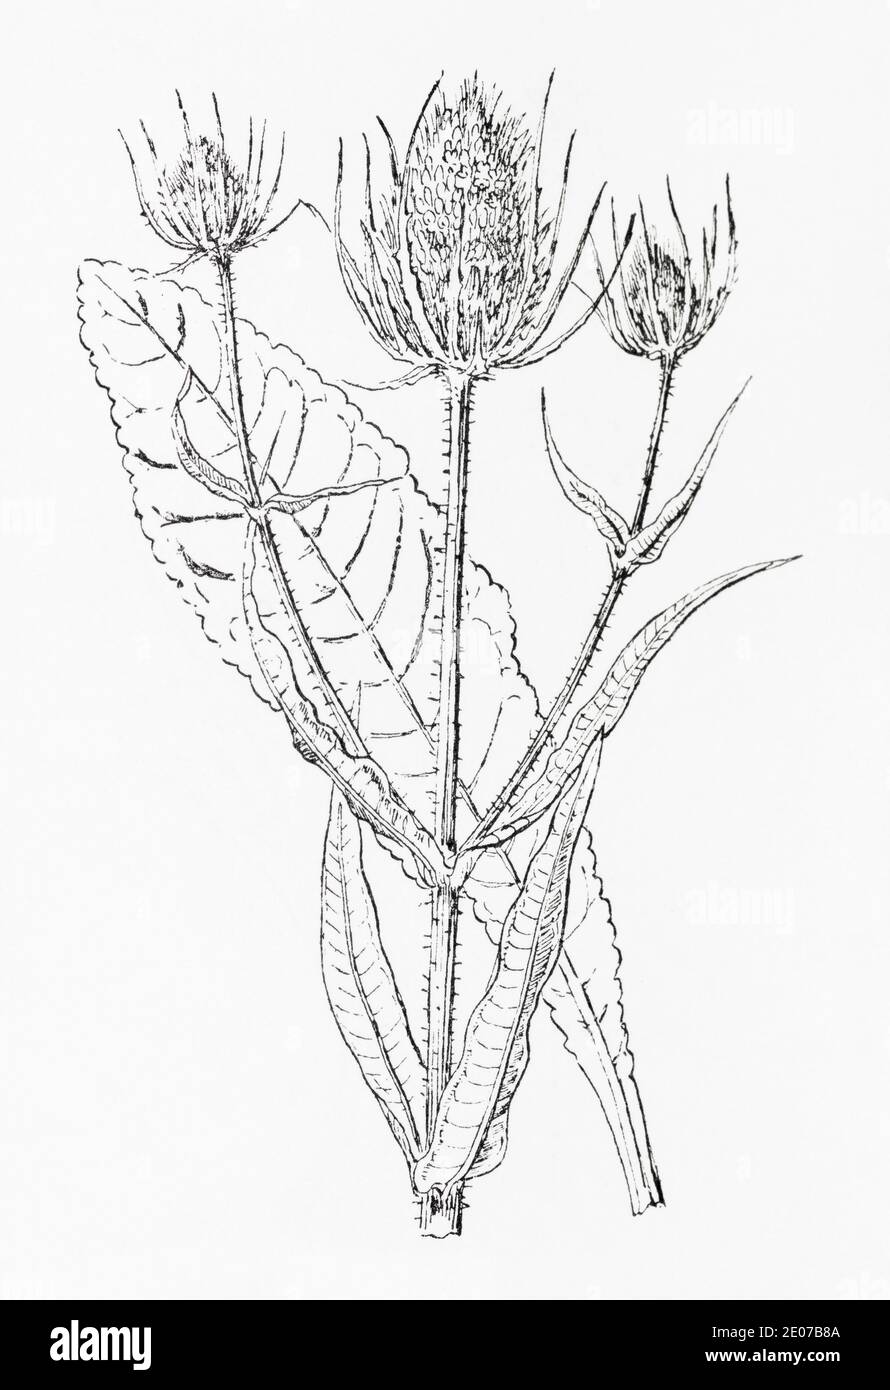 Old botanical illustration engraving of Teasel / Dipsacus fullonum, Dipsacus sylvestris. Traditional medicinal herbal plant. See Notes Stock Photo